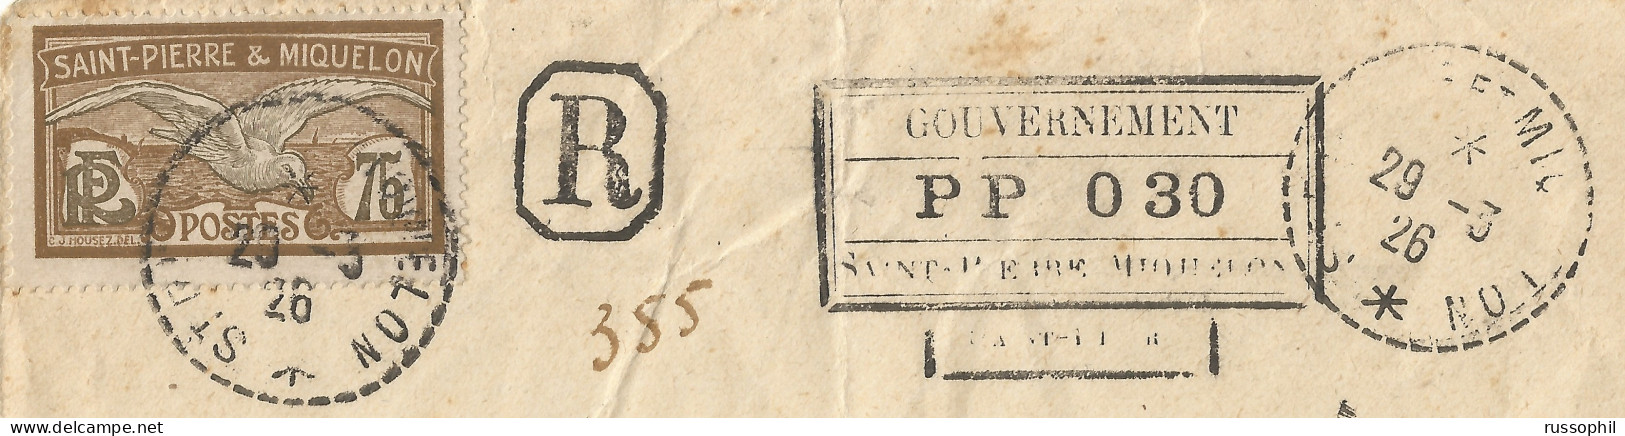 SAINT PIERRE ET MIQUELON - 30 CENT "PORT PAYE - POST PAID - PP" REGISTERED COVER TO FRANCE - 1926  - Covers & Documents